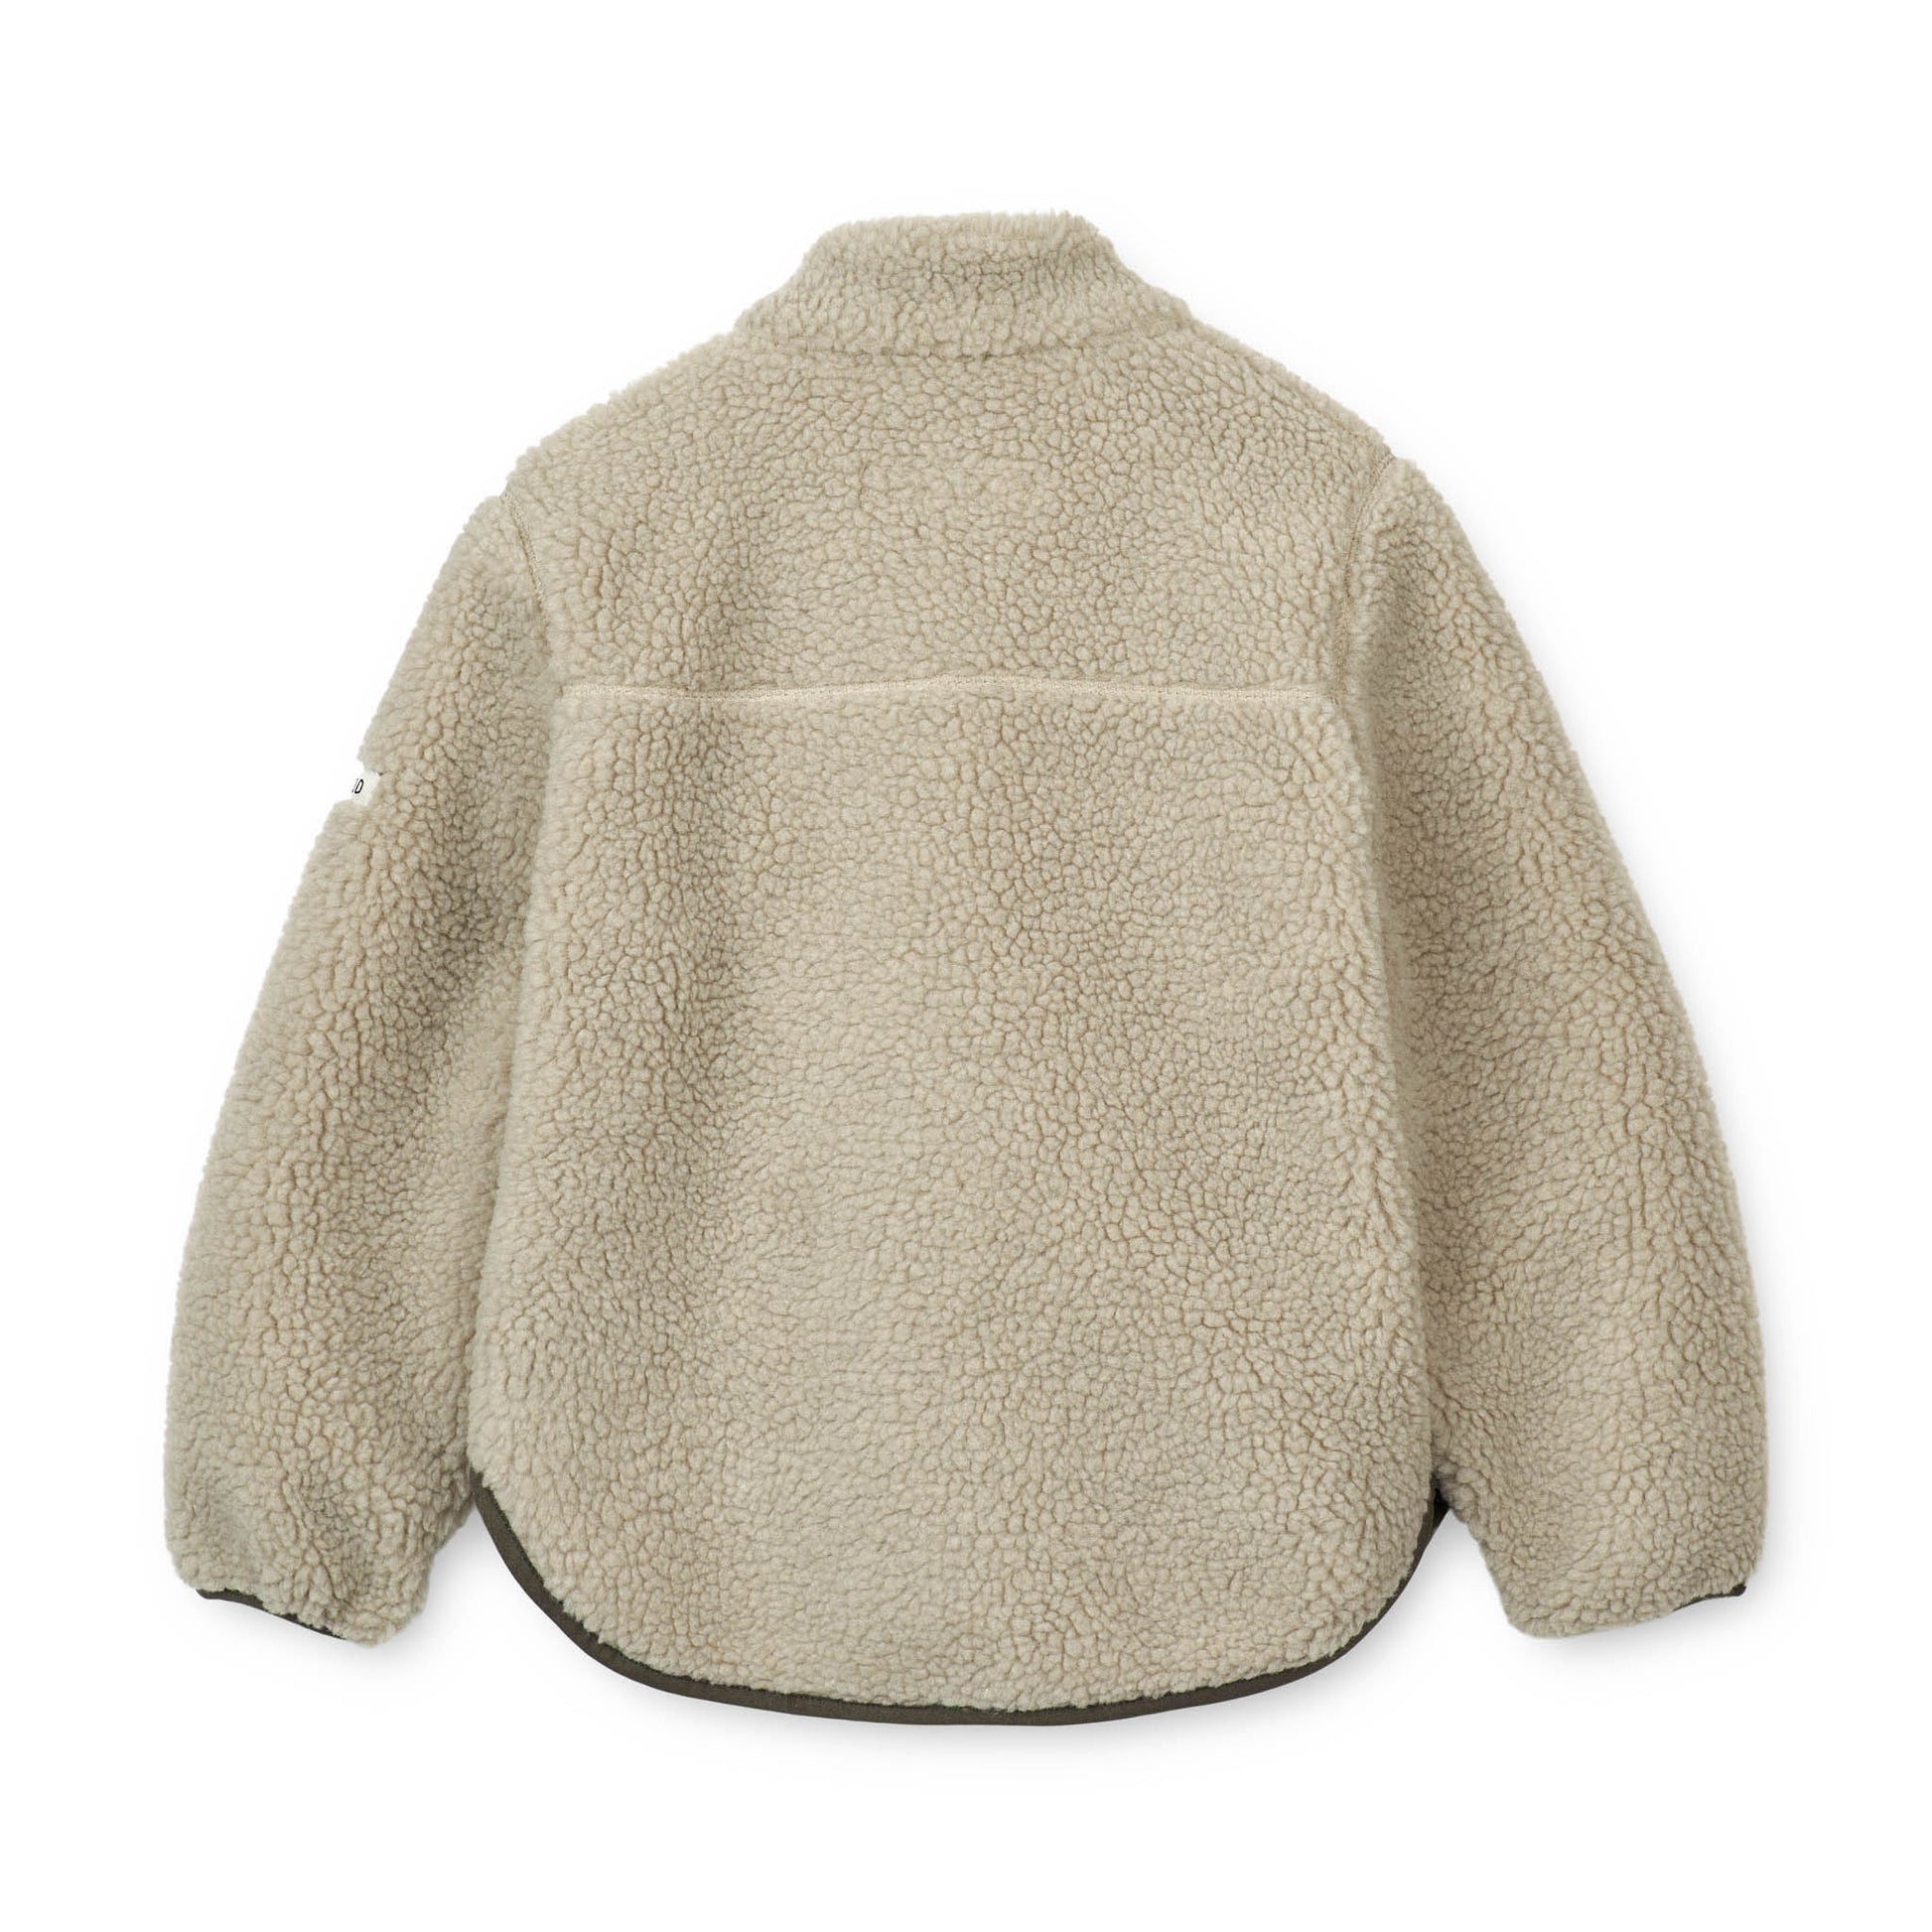 Liewood - Teddyjacke "Nolan Pile Jacket" | Mist / Army brown - Leja Concept Store